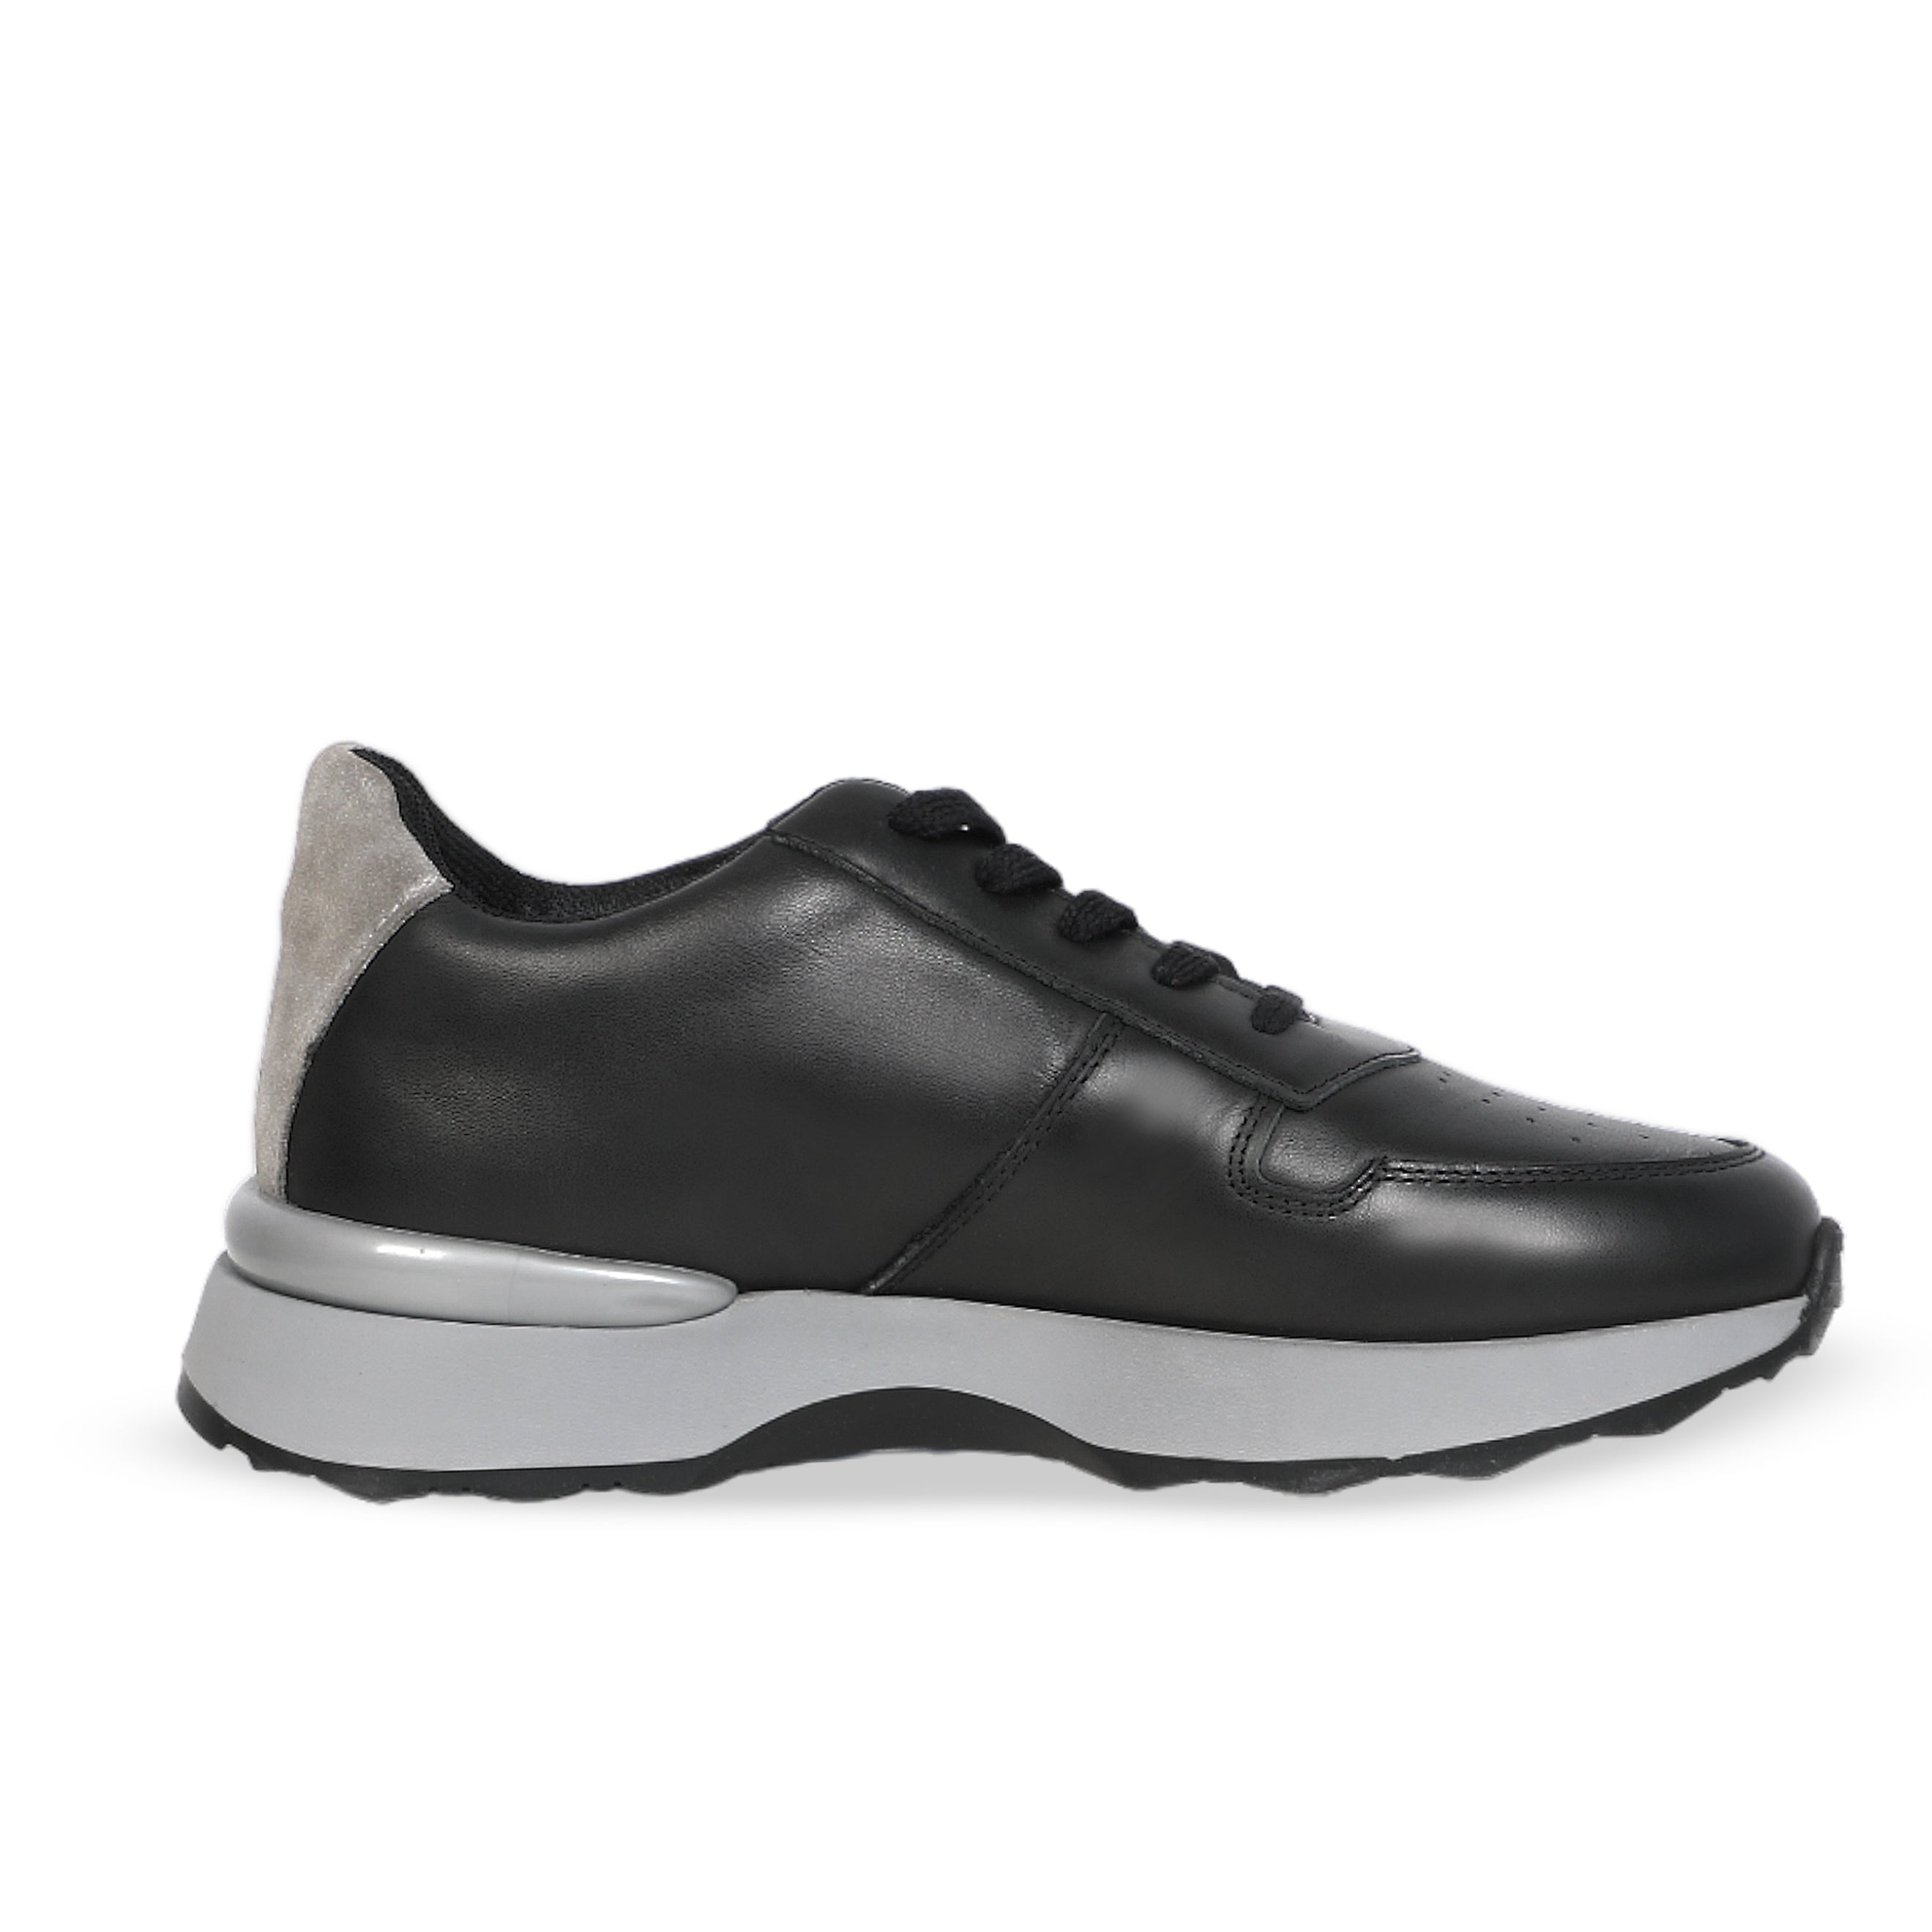 Men Black with Grey Heels Casual Shoes